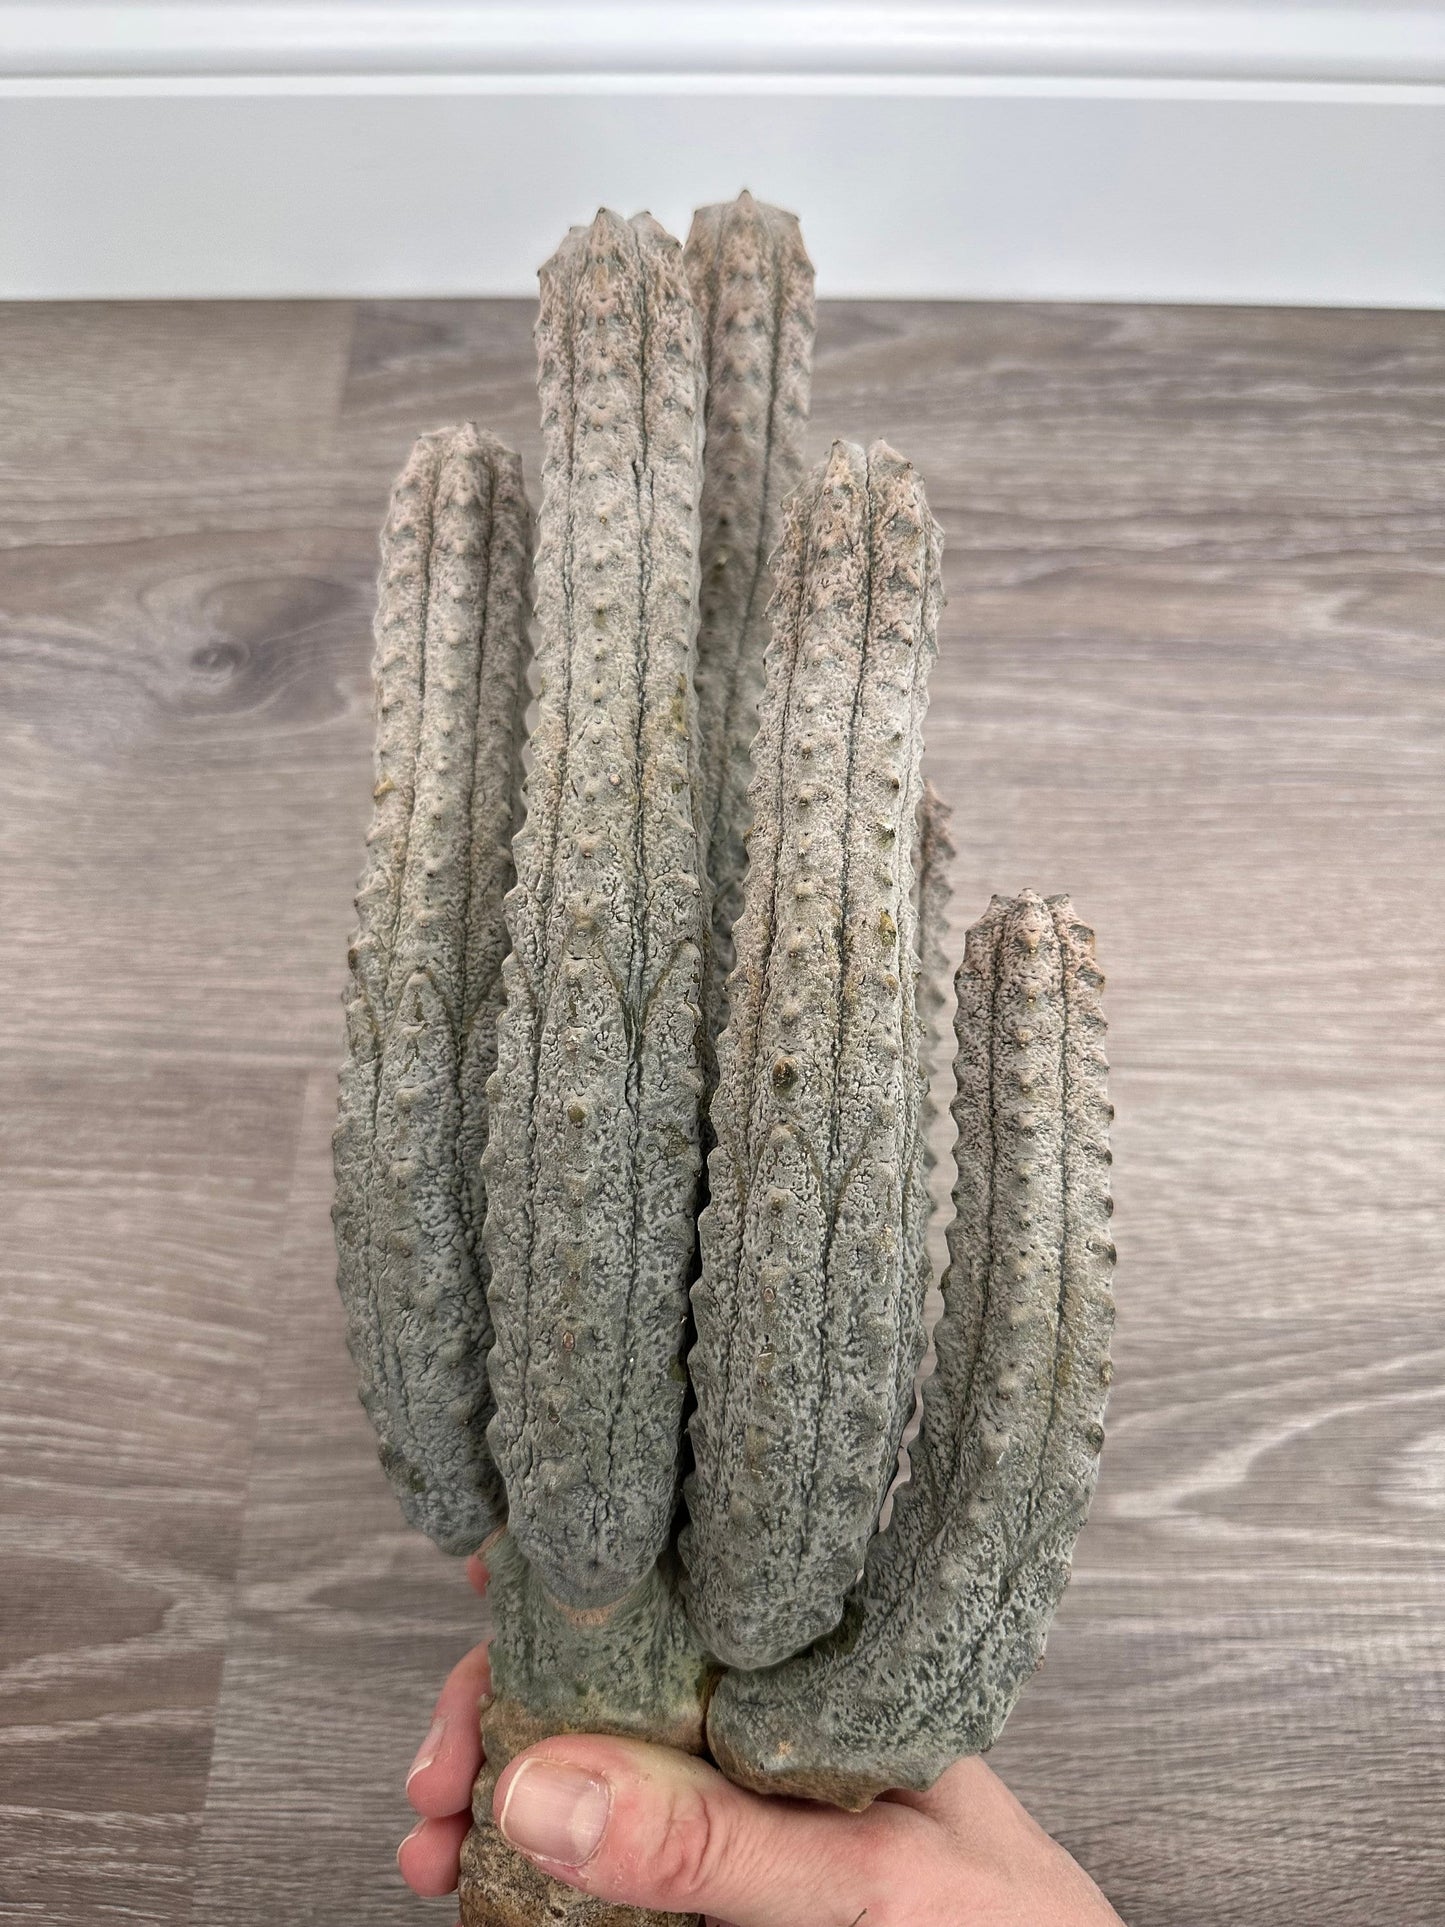 Euphorbia Abdelkuri Gray Cluster - Unique Live Cactus - Candelabra-like Succulent